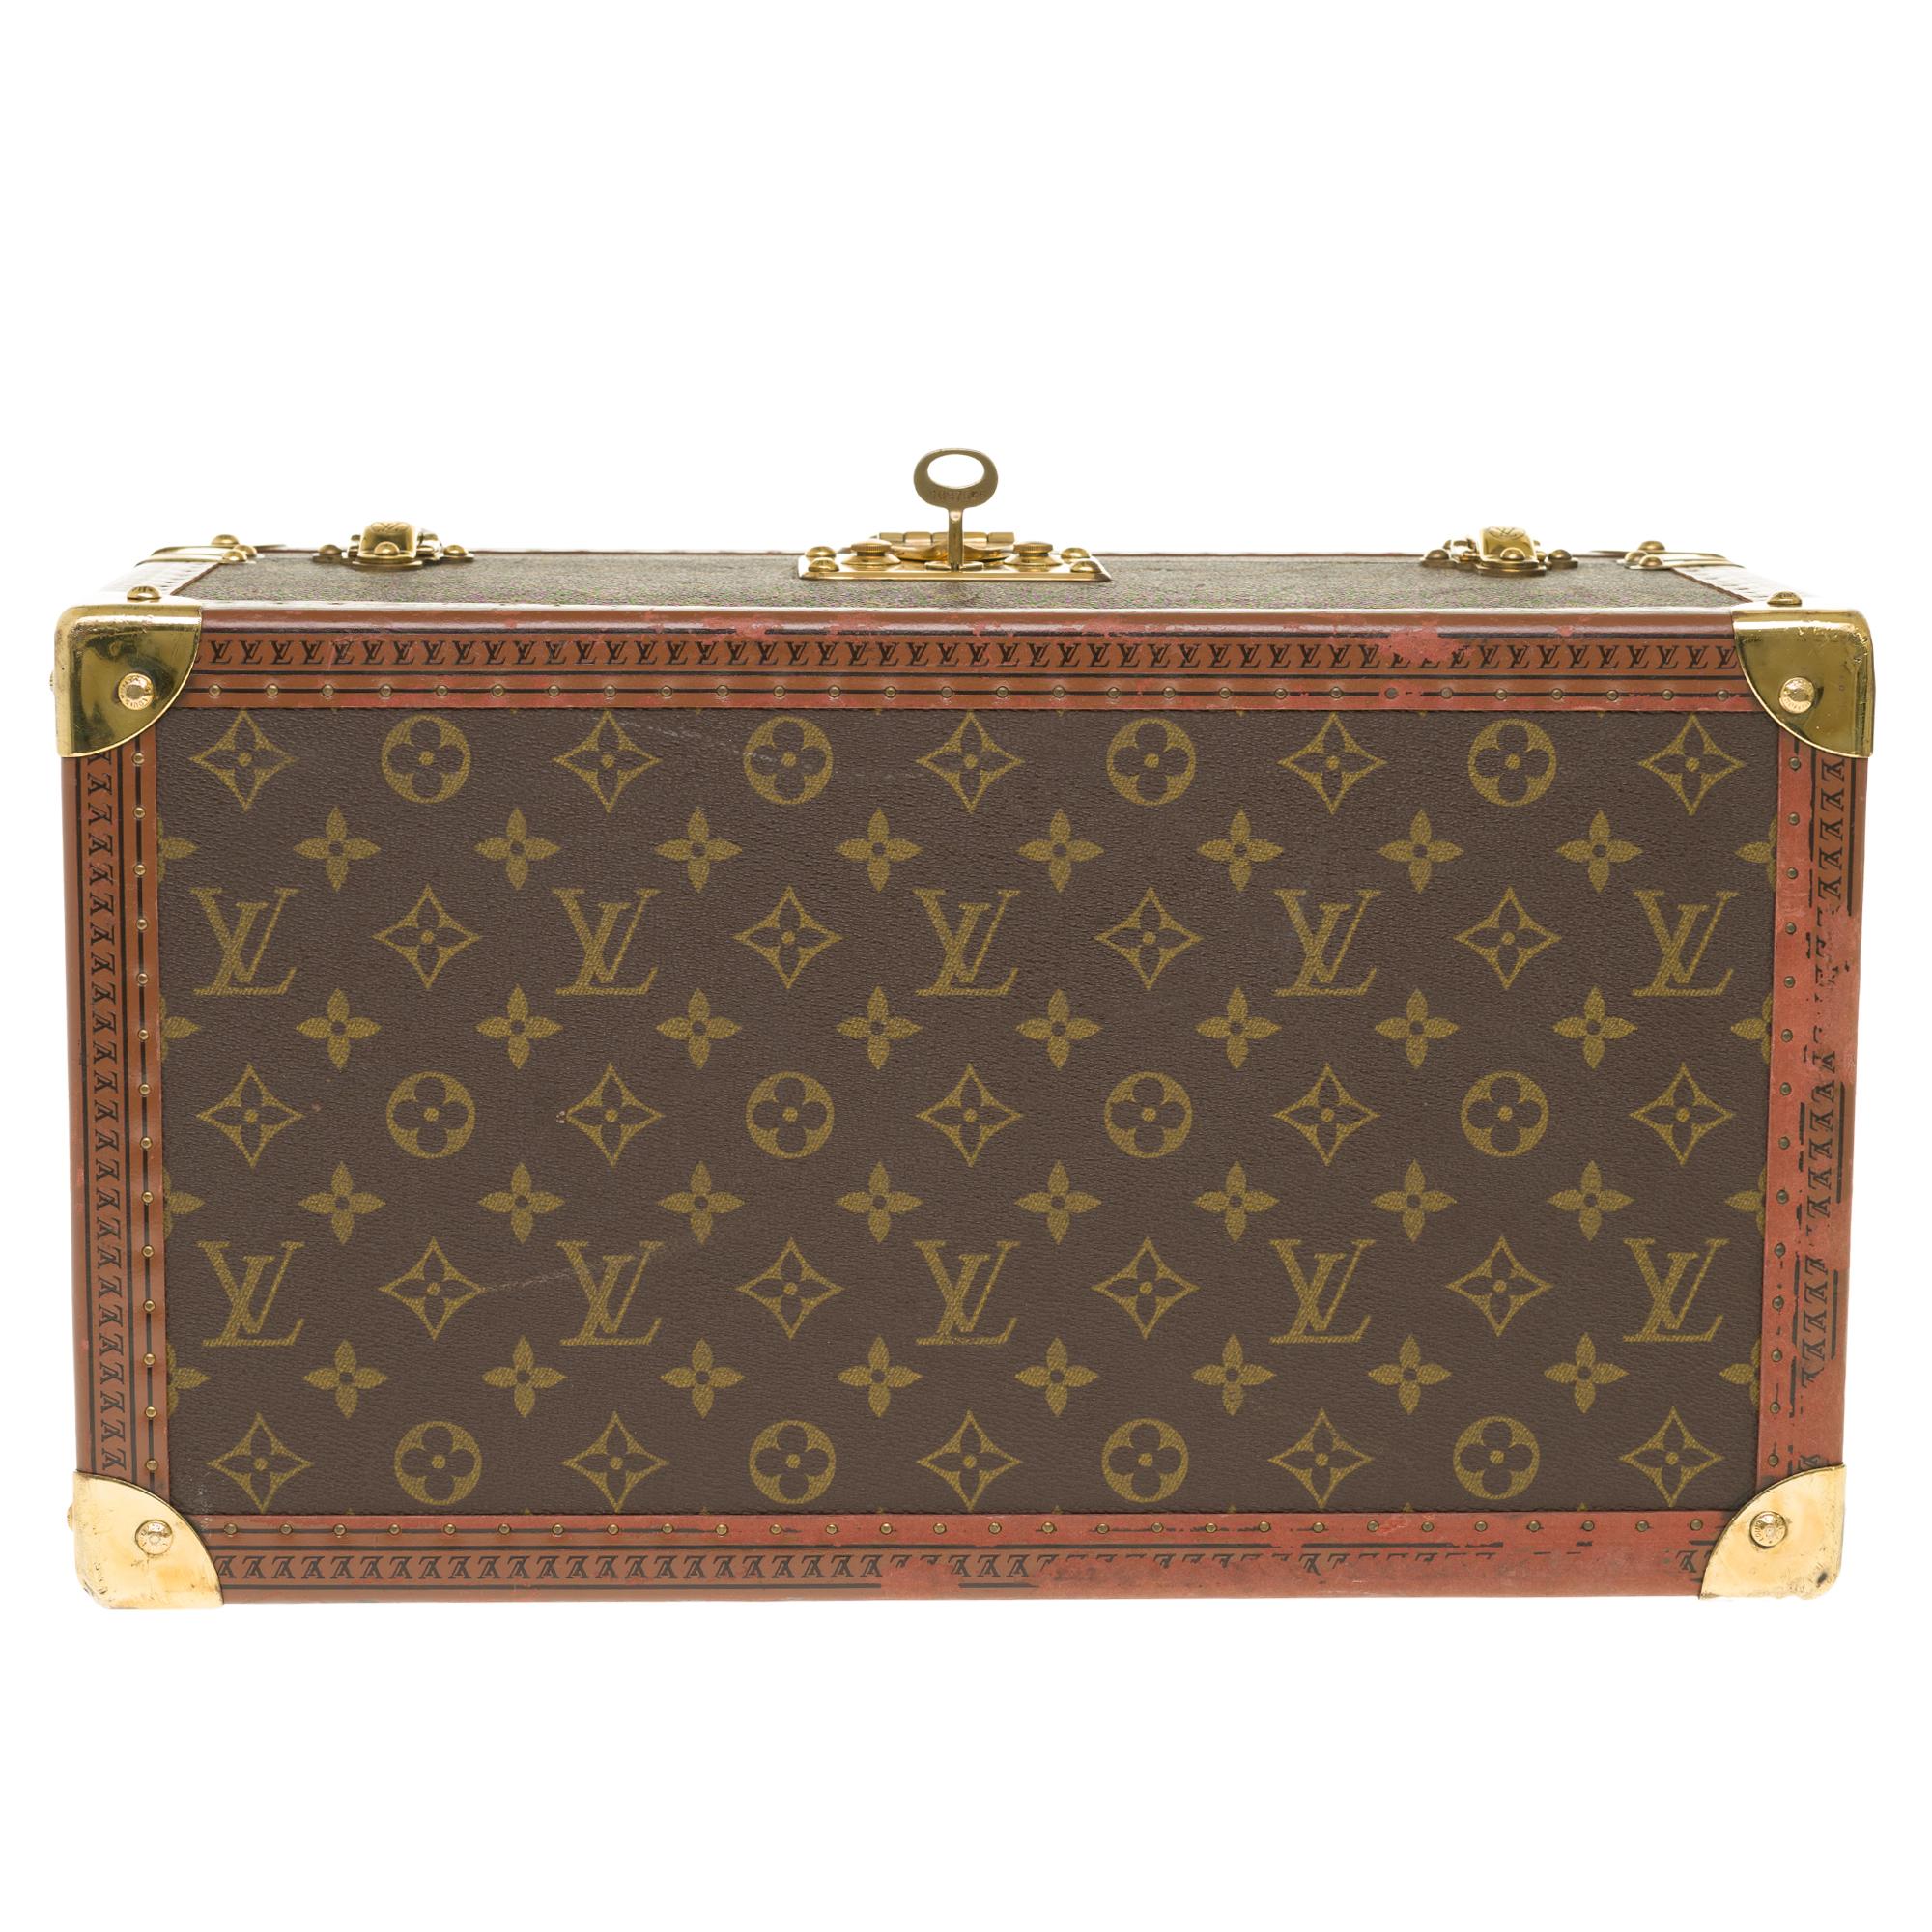 Amazing Louis Vuitton Vanity Case in monogram Canvas and brass hardware 3